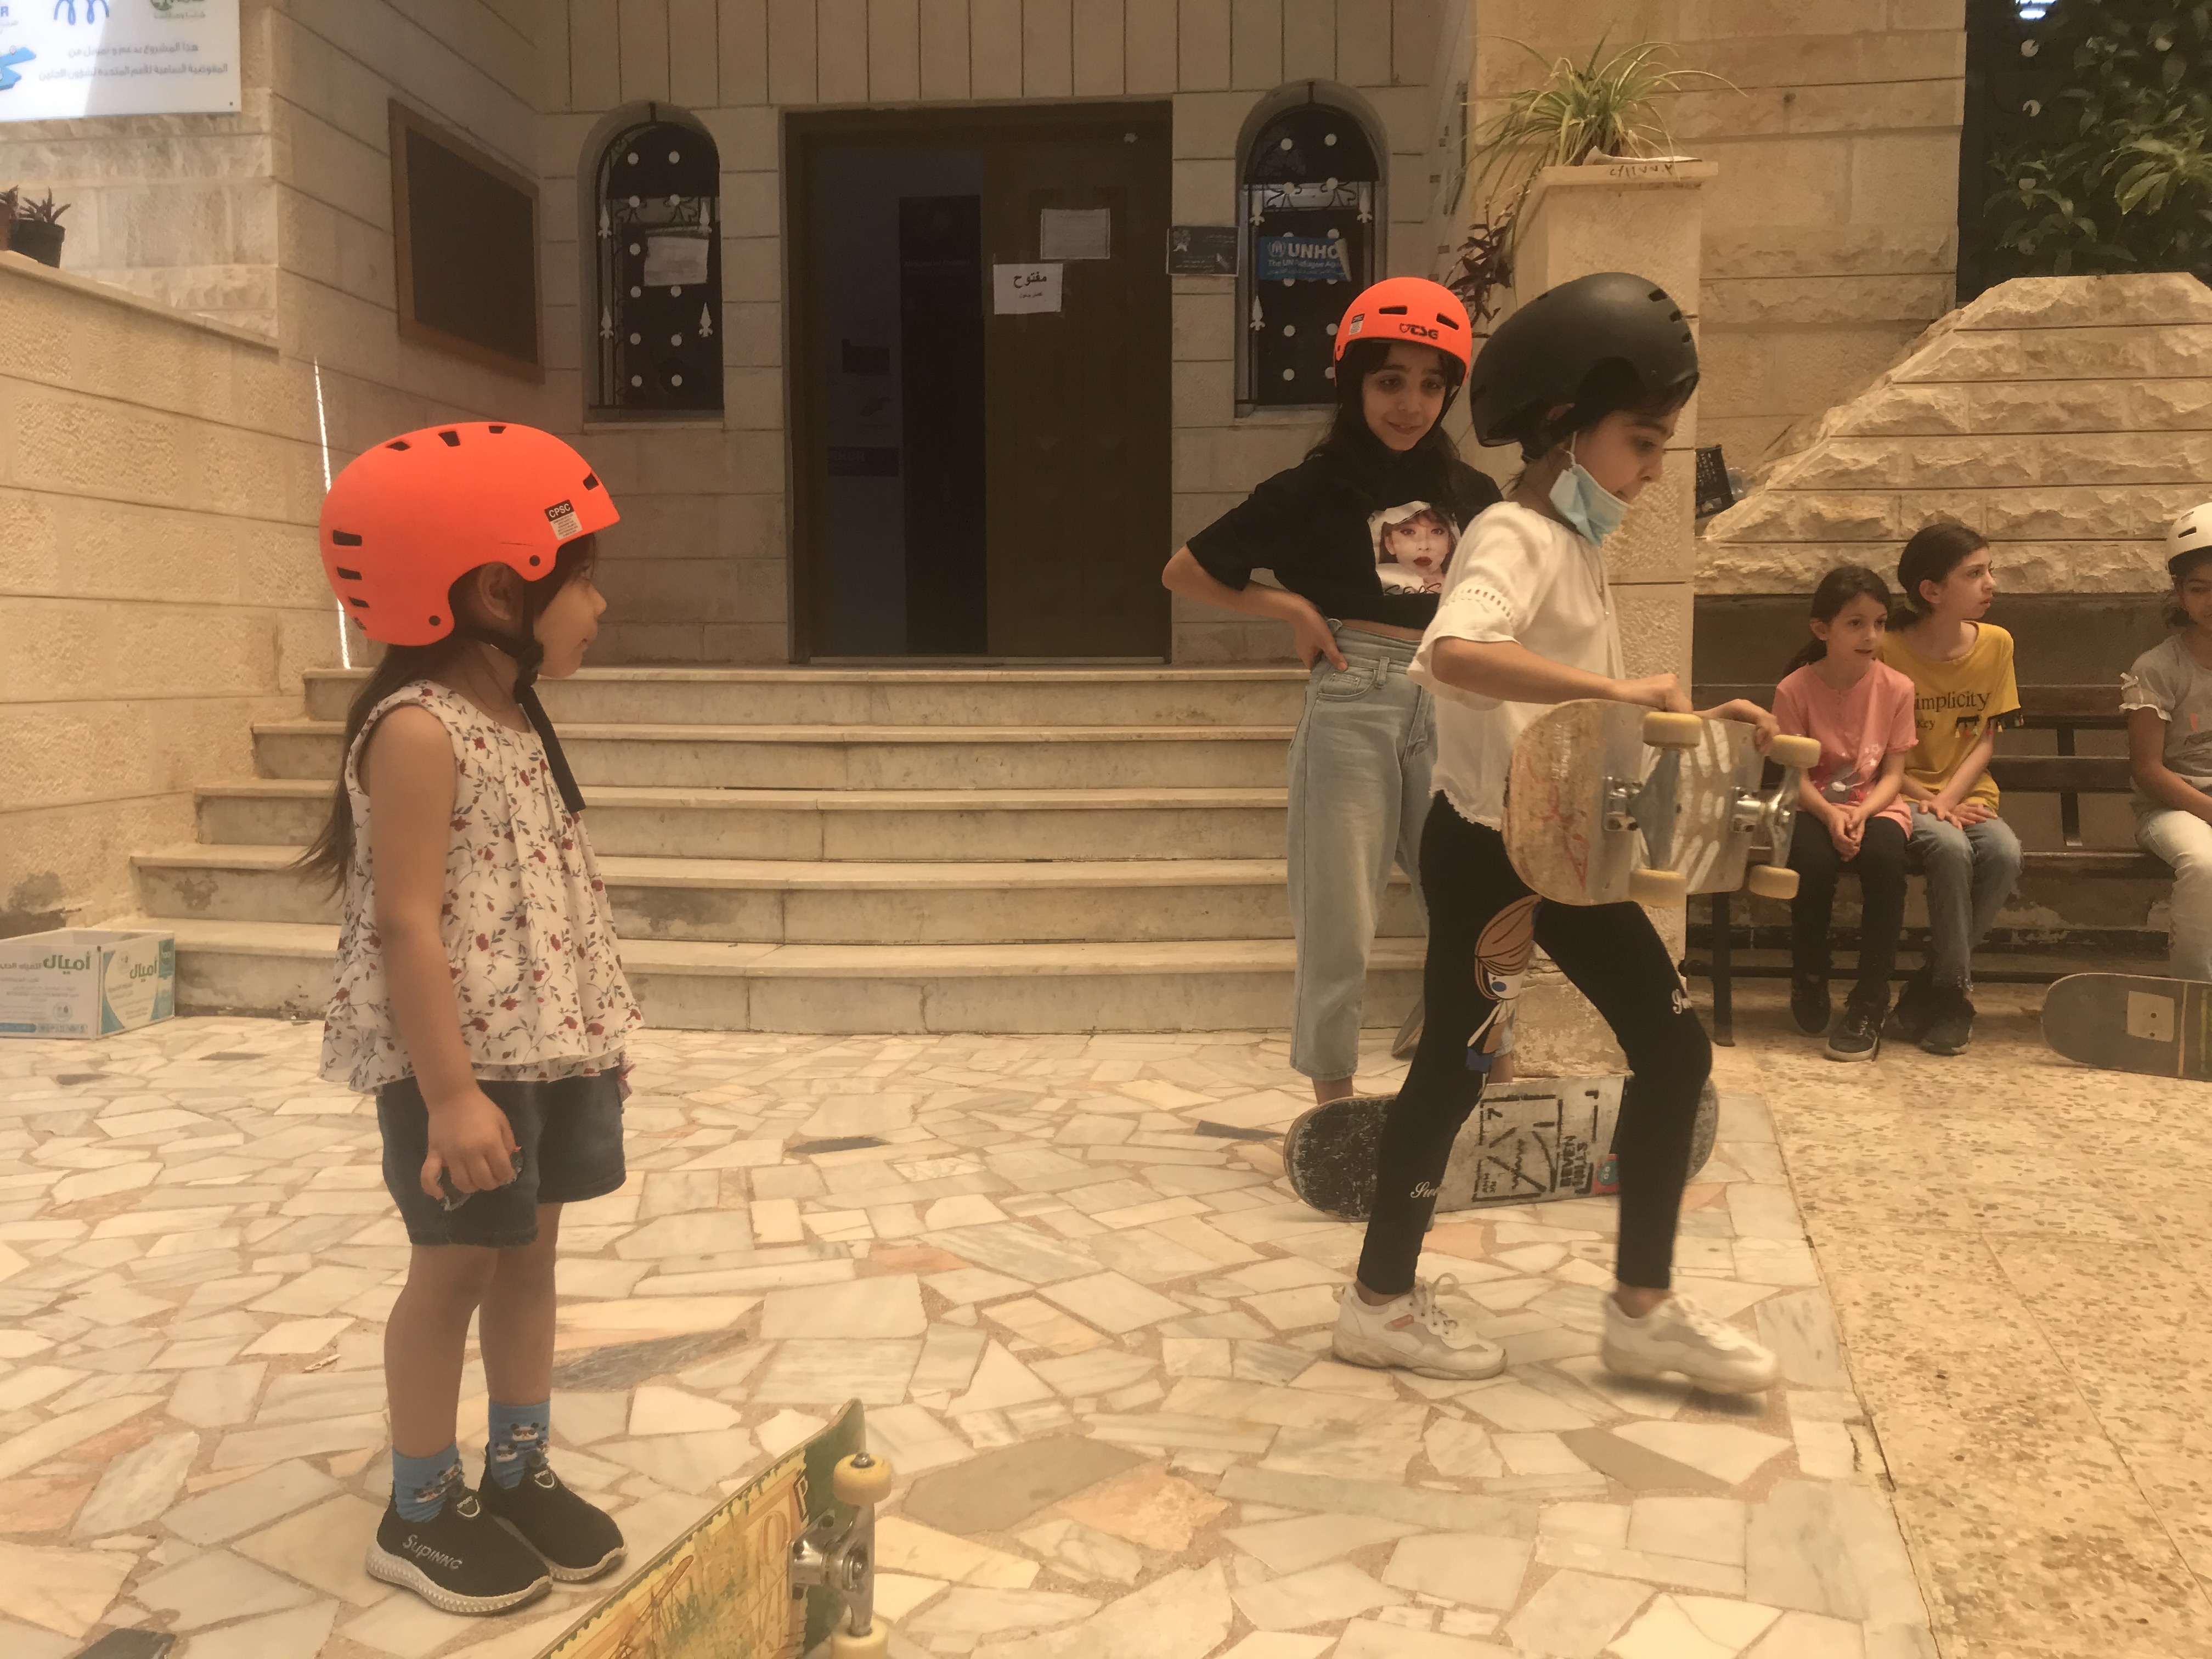 A girls' skate session in Zarqa